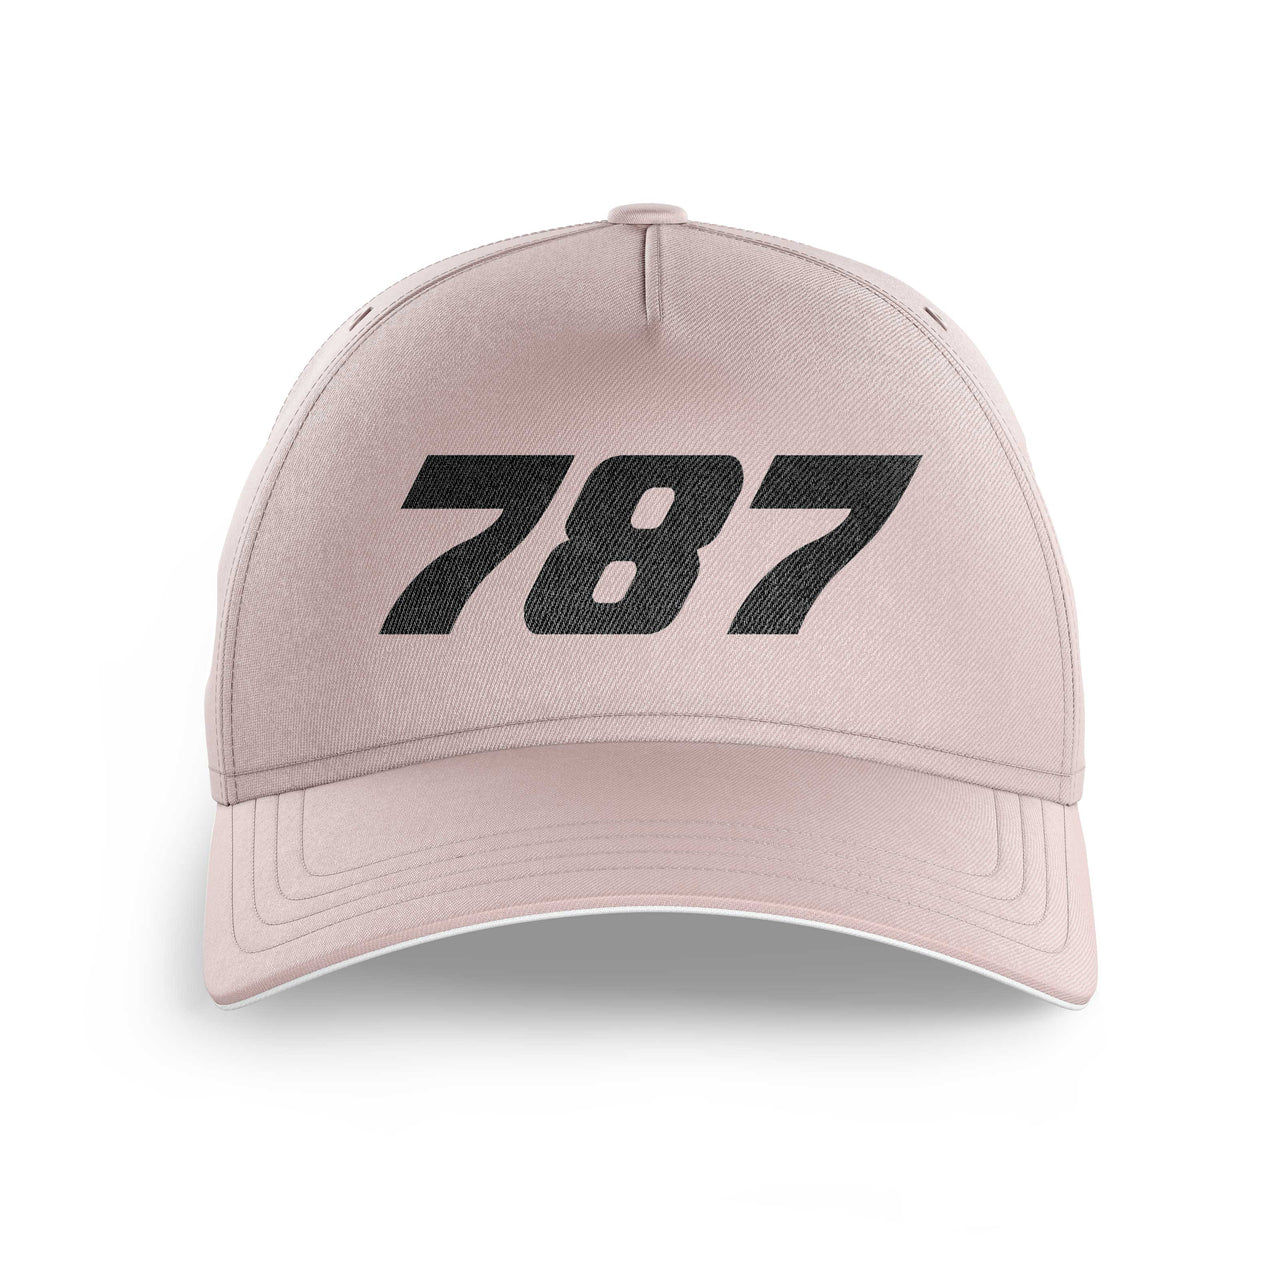 787 Flat Text Printed Hats